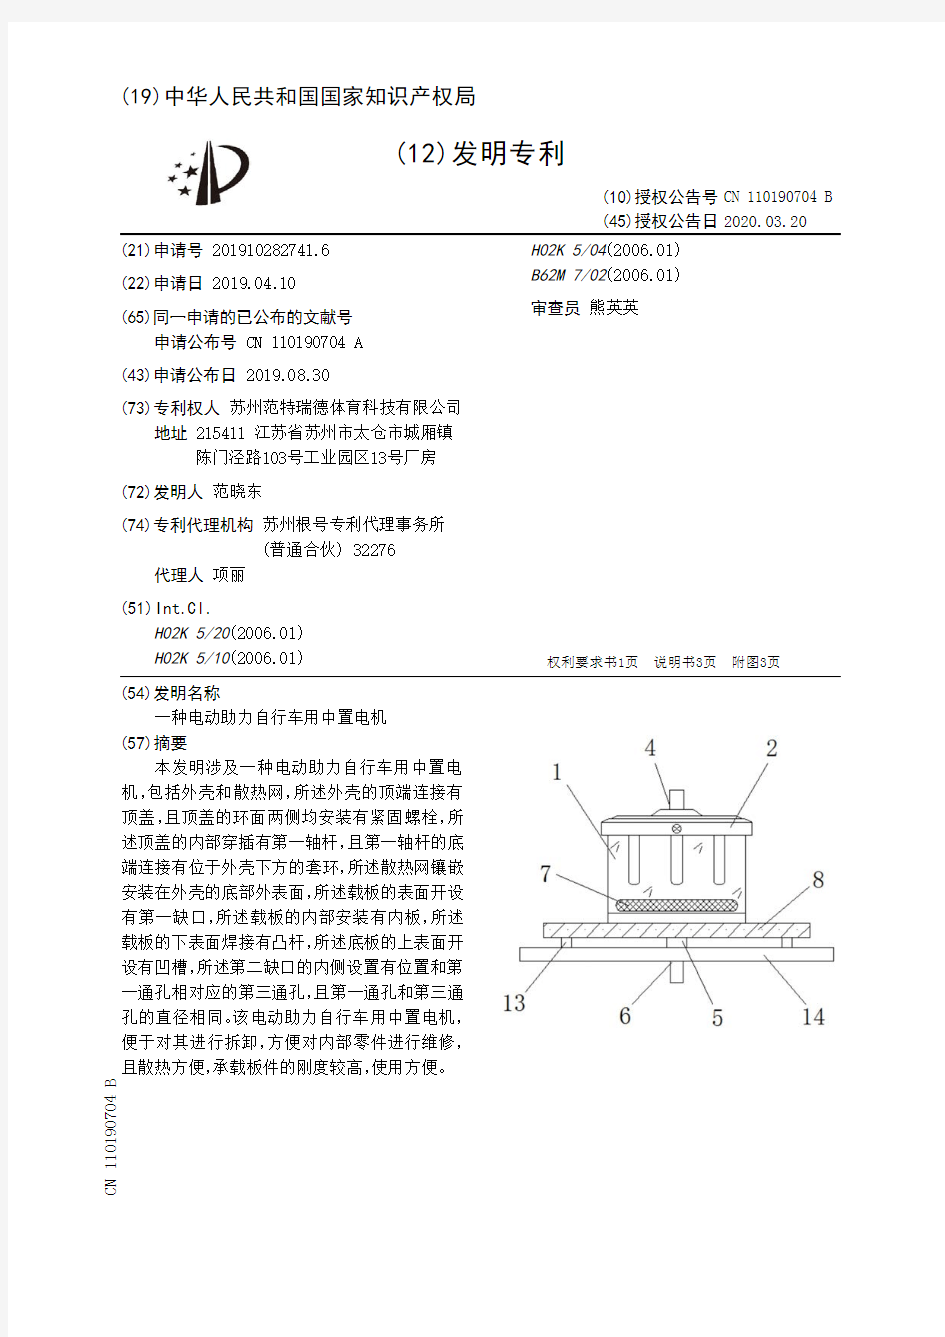 【CN110190704B】一种电动助力自行车用中置电机【专利】